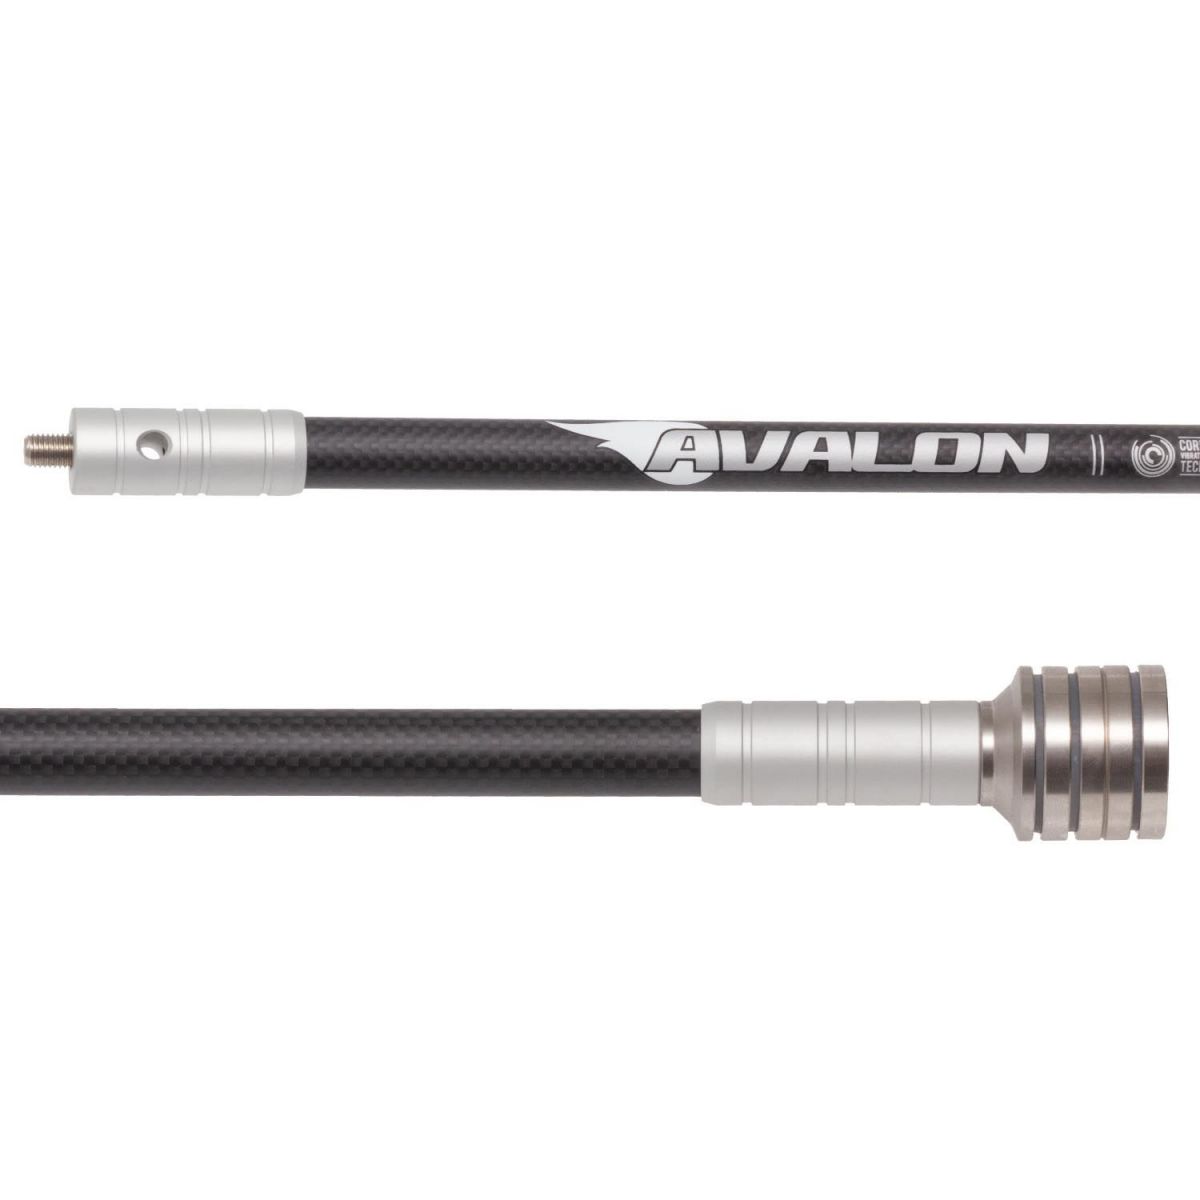 Avalon Stabilisator Tec X 16 mm "Inflexible" Lang